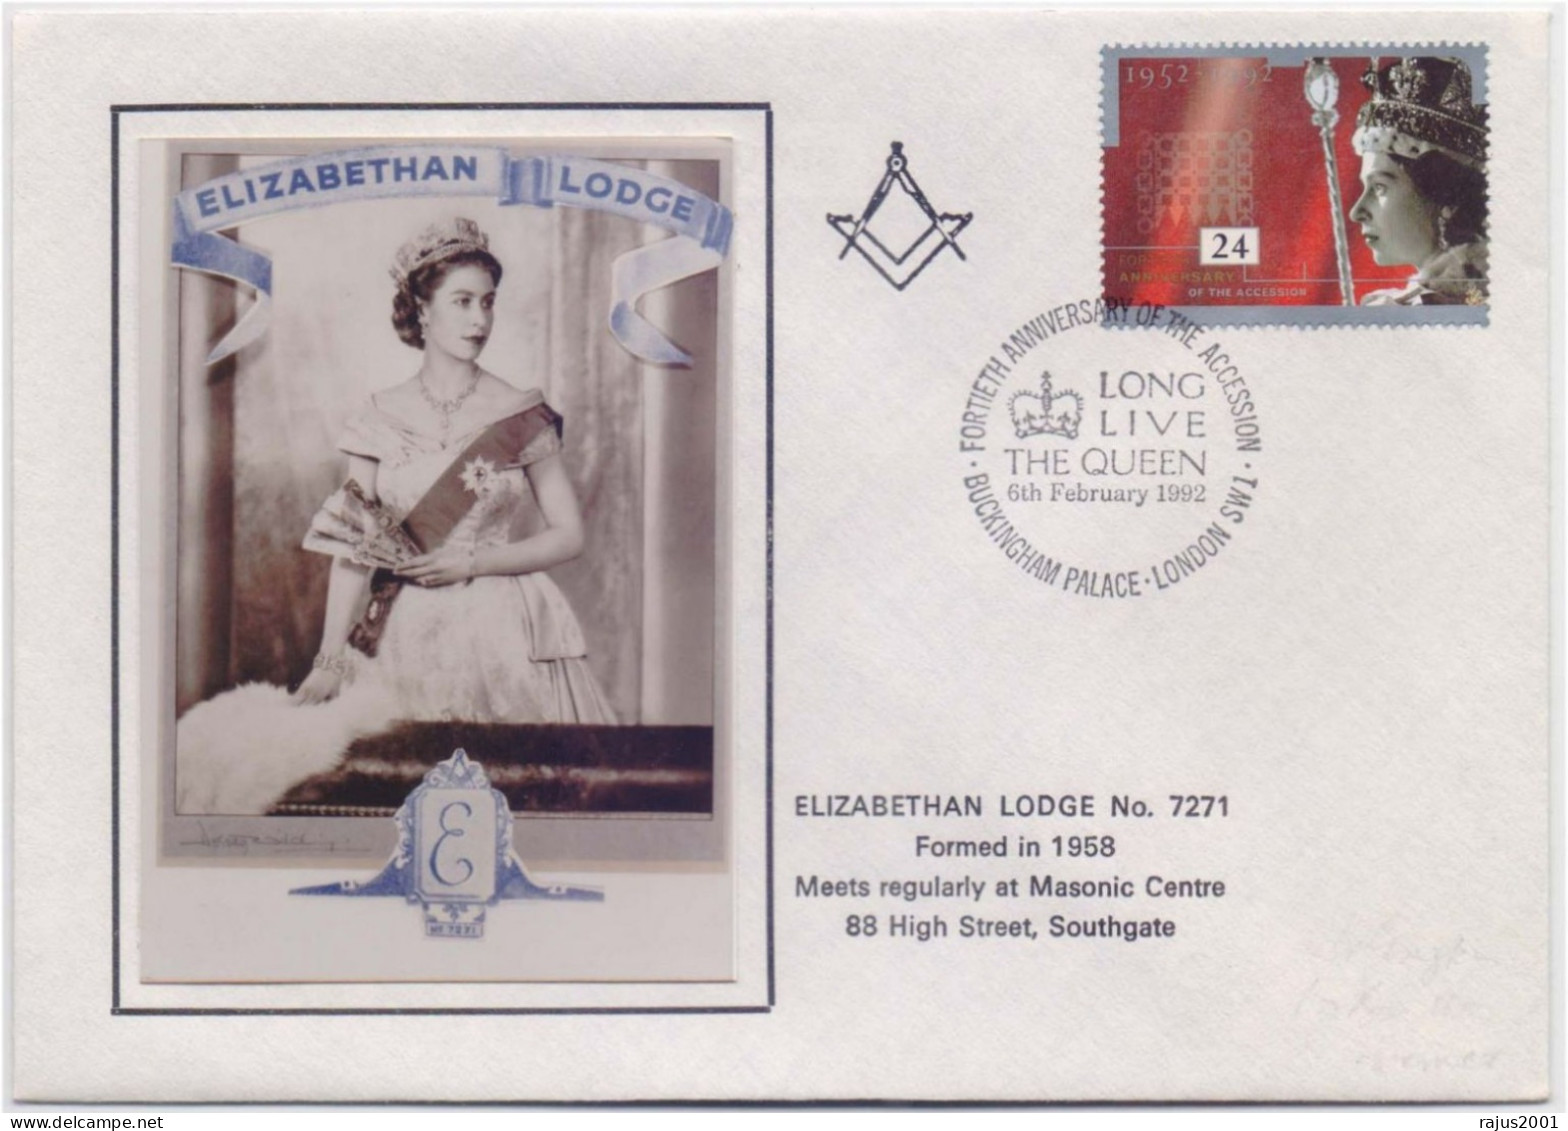 ELIZABETHAN LODGE NO 7271 FORMED IN 1958, Queen Elizabeth, Freemasonry, Masonic Limited Only 100 Cover Issued Cover - Francmasonería